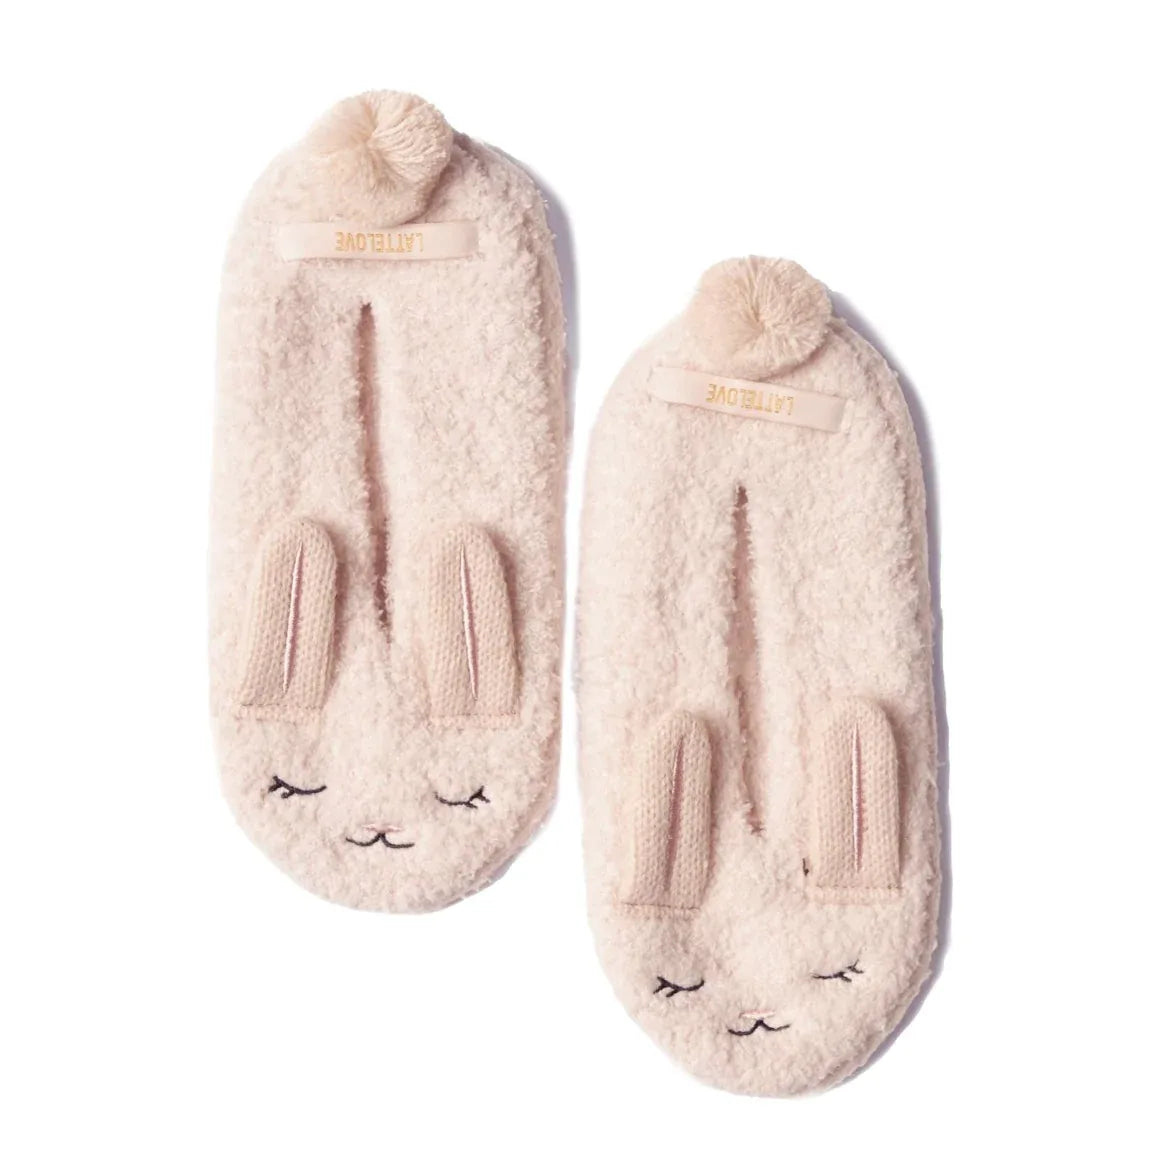 Bunny Slipper Socks by Latte Love at Belle Lacet Lingerie